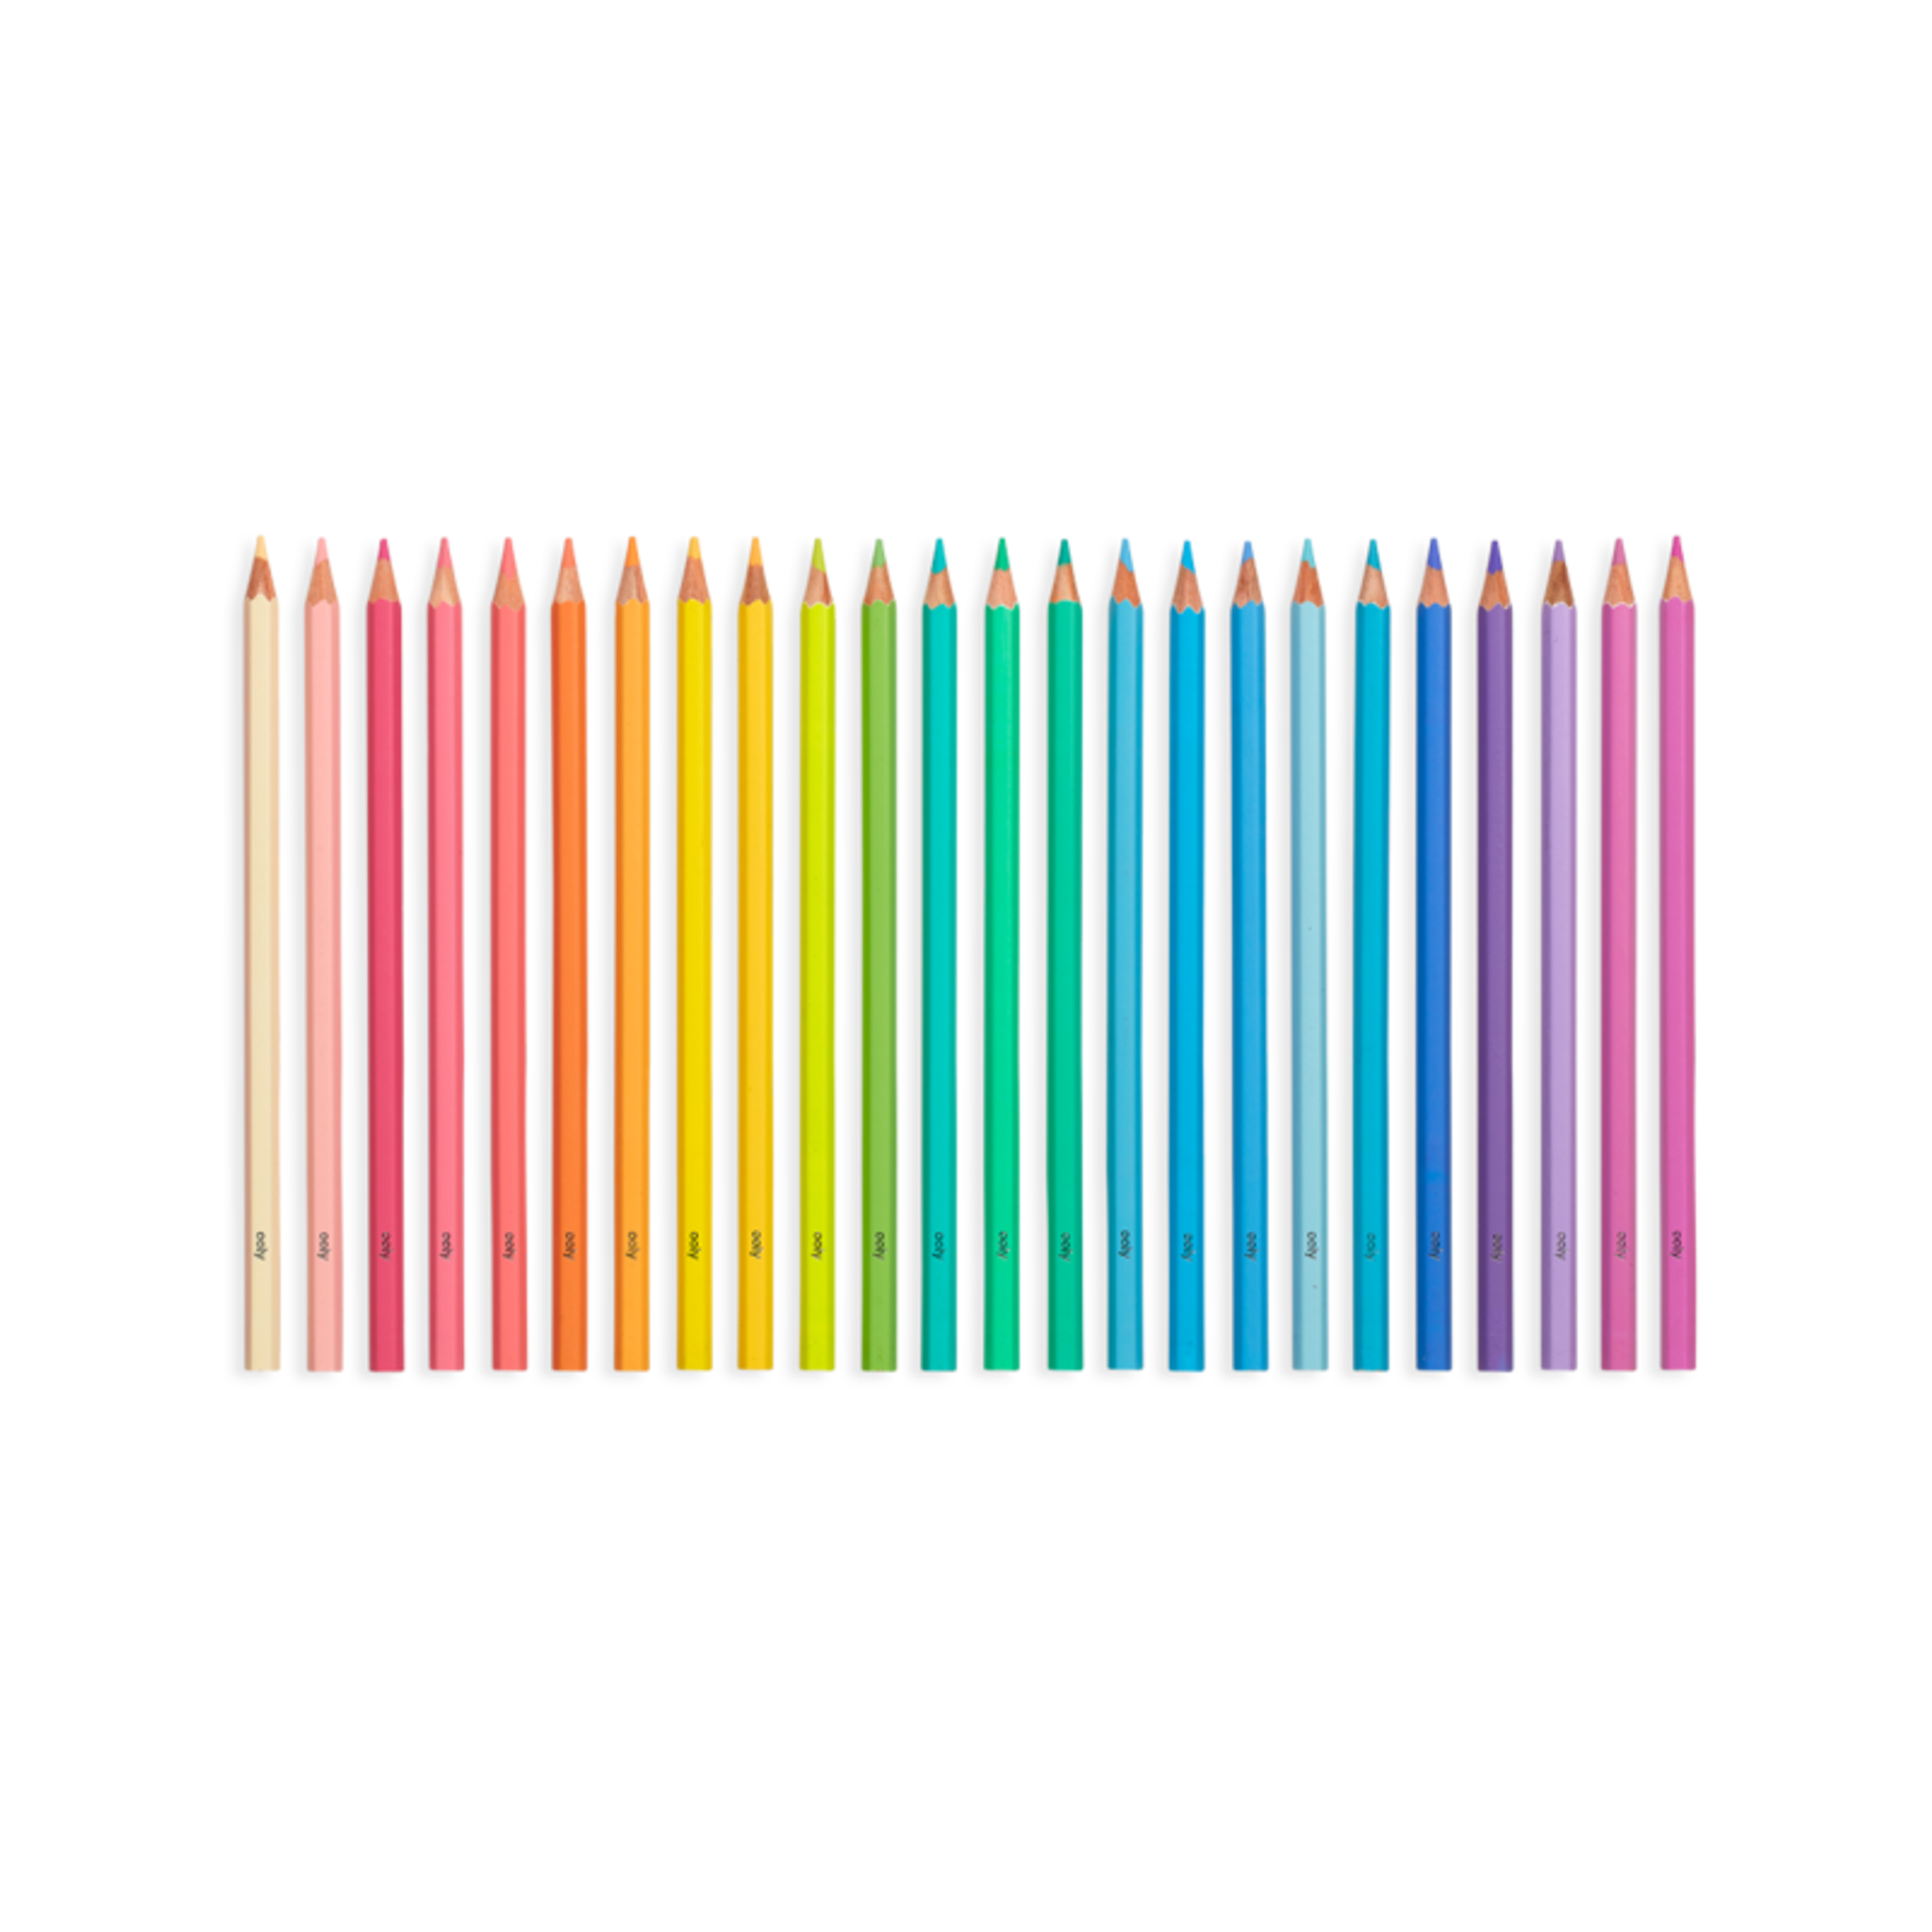 OOLY Modern Metallics Colored Pencils Set